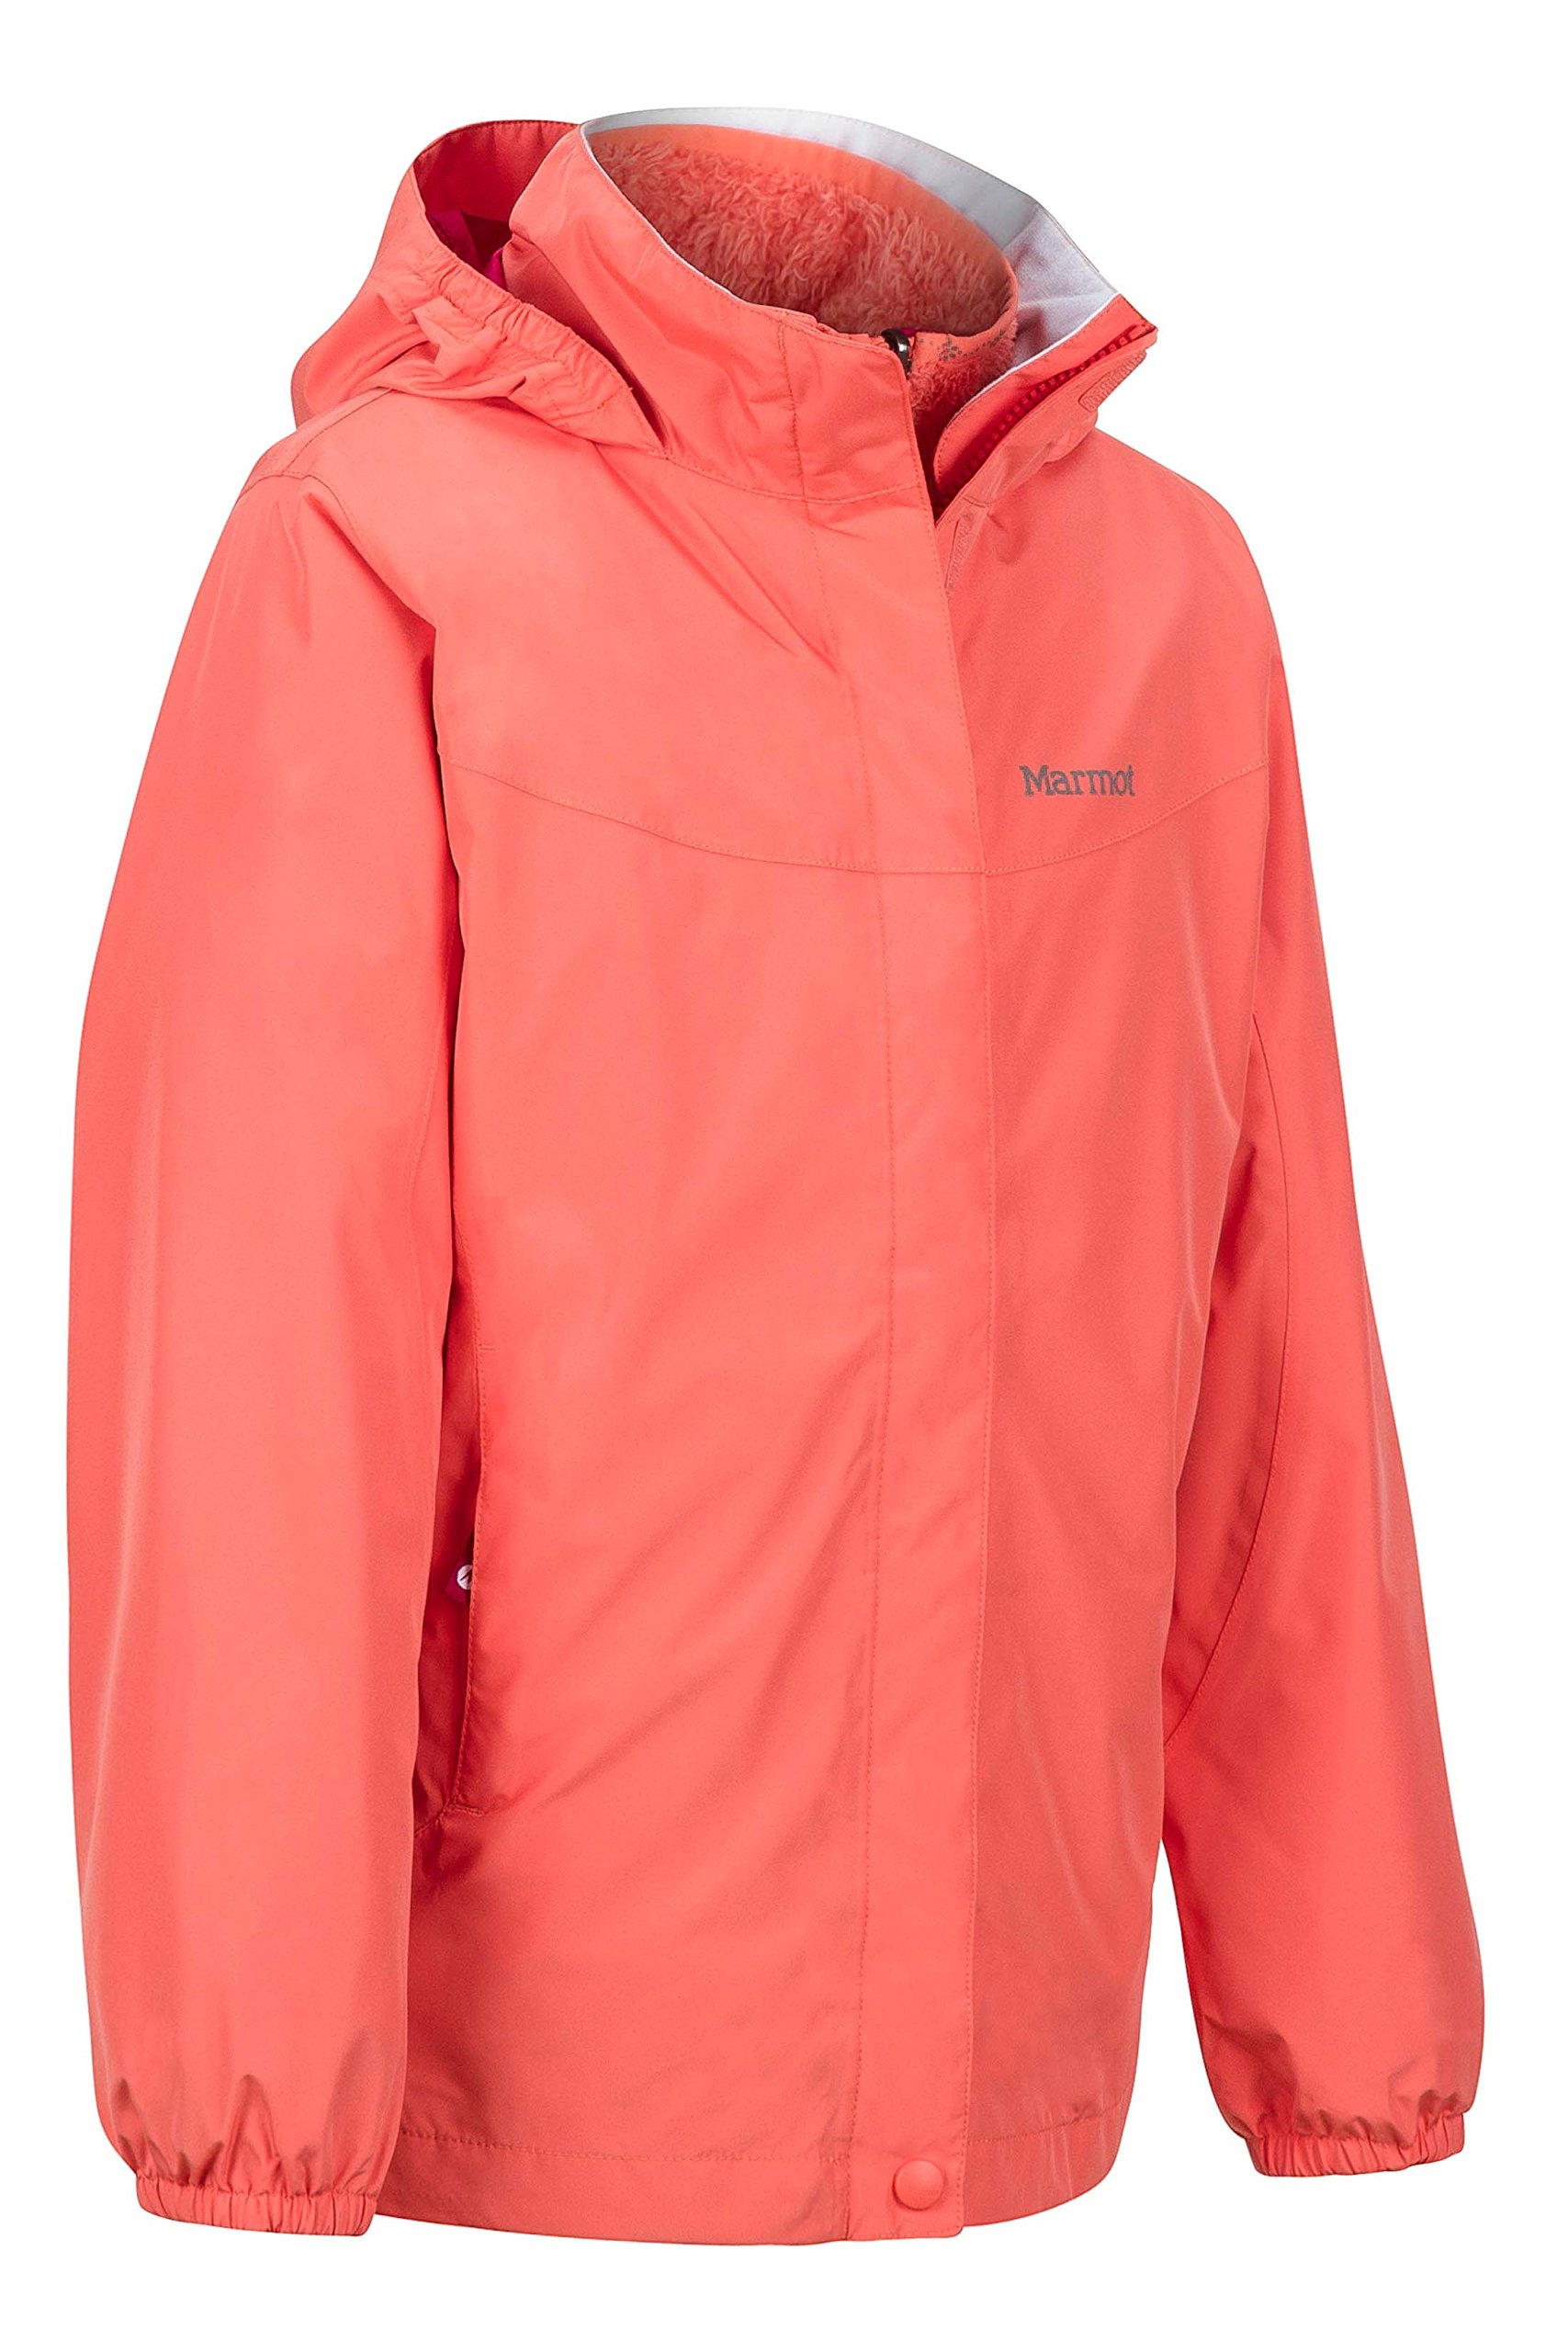 Marmot Northshore Girls' Waterproof Hooded Rain Jacket with Removable Fleece Liner